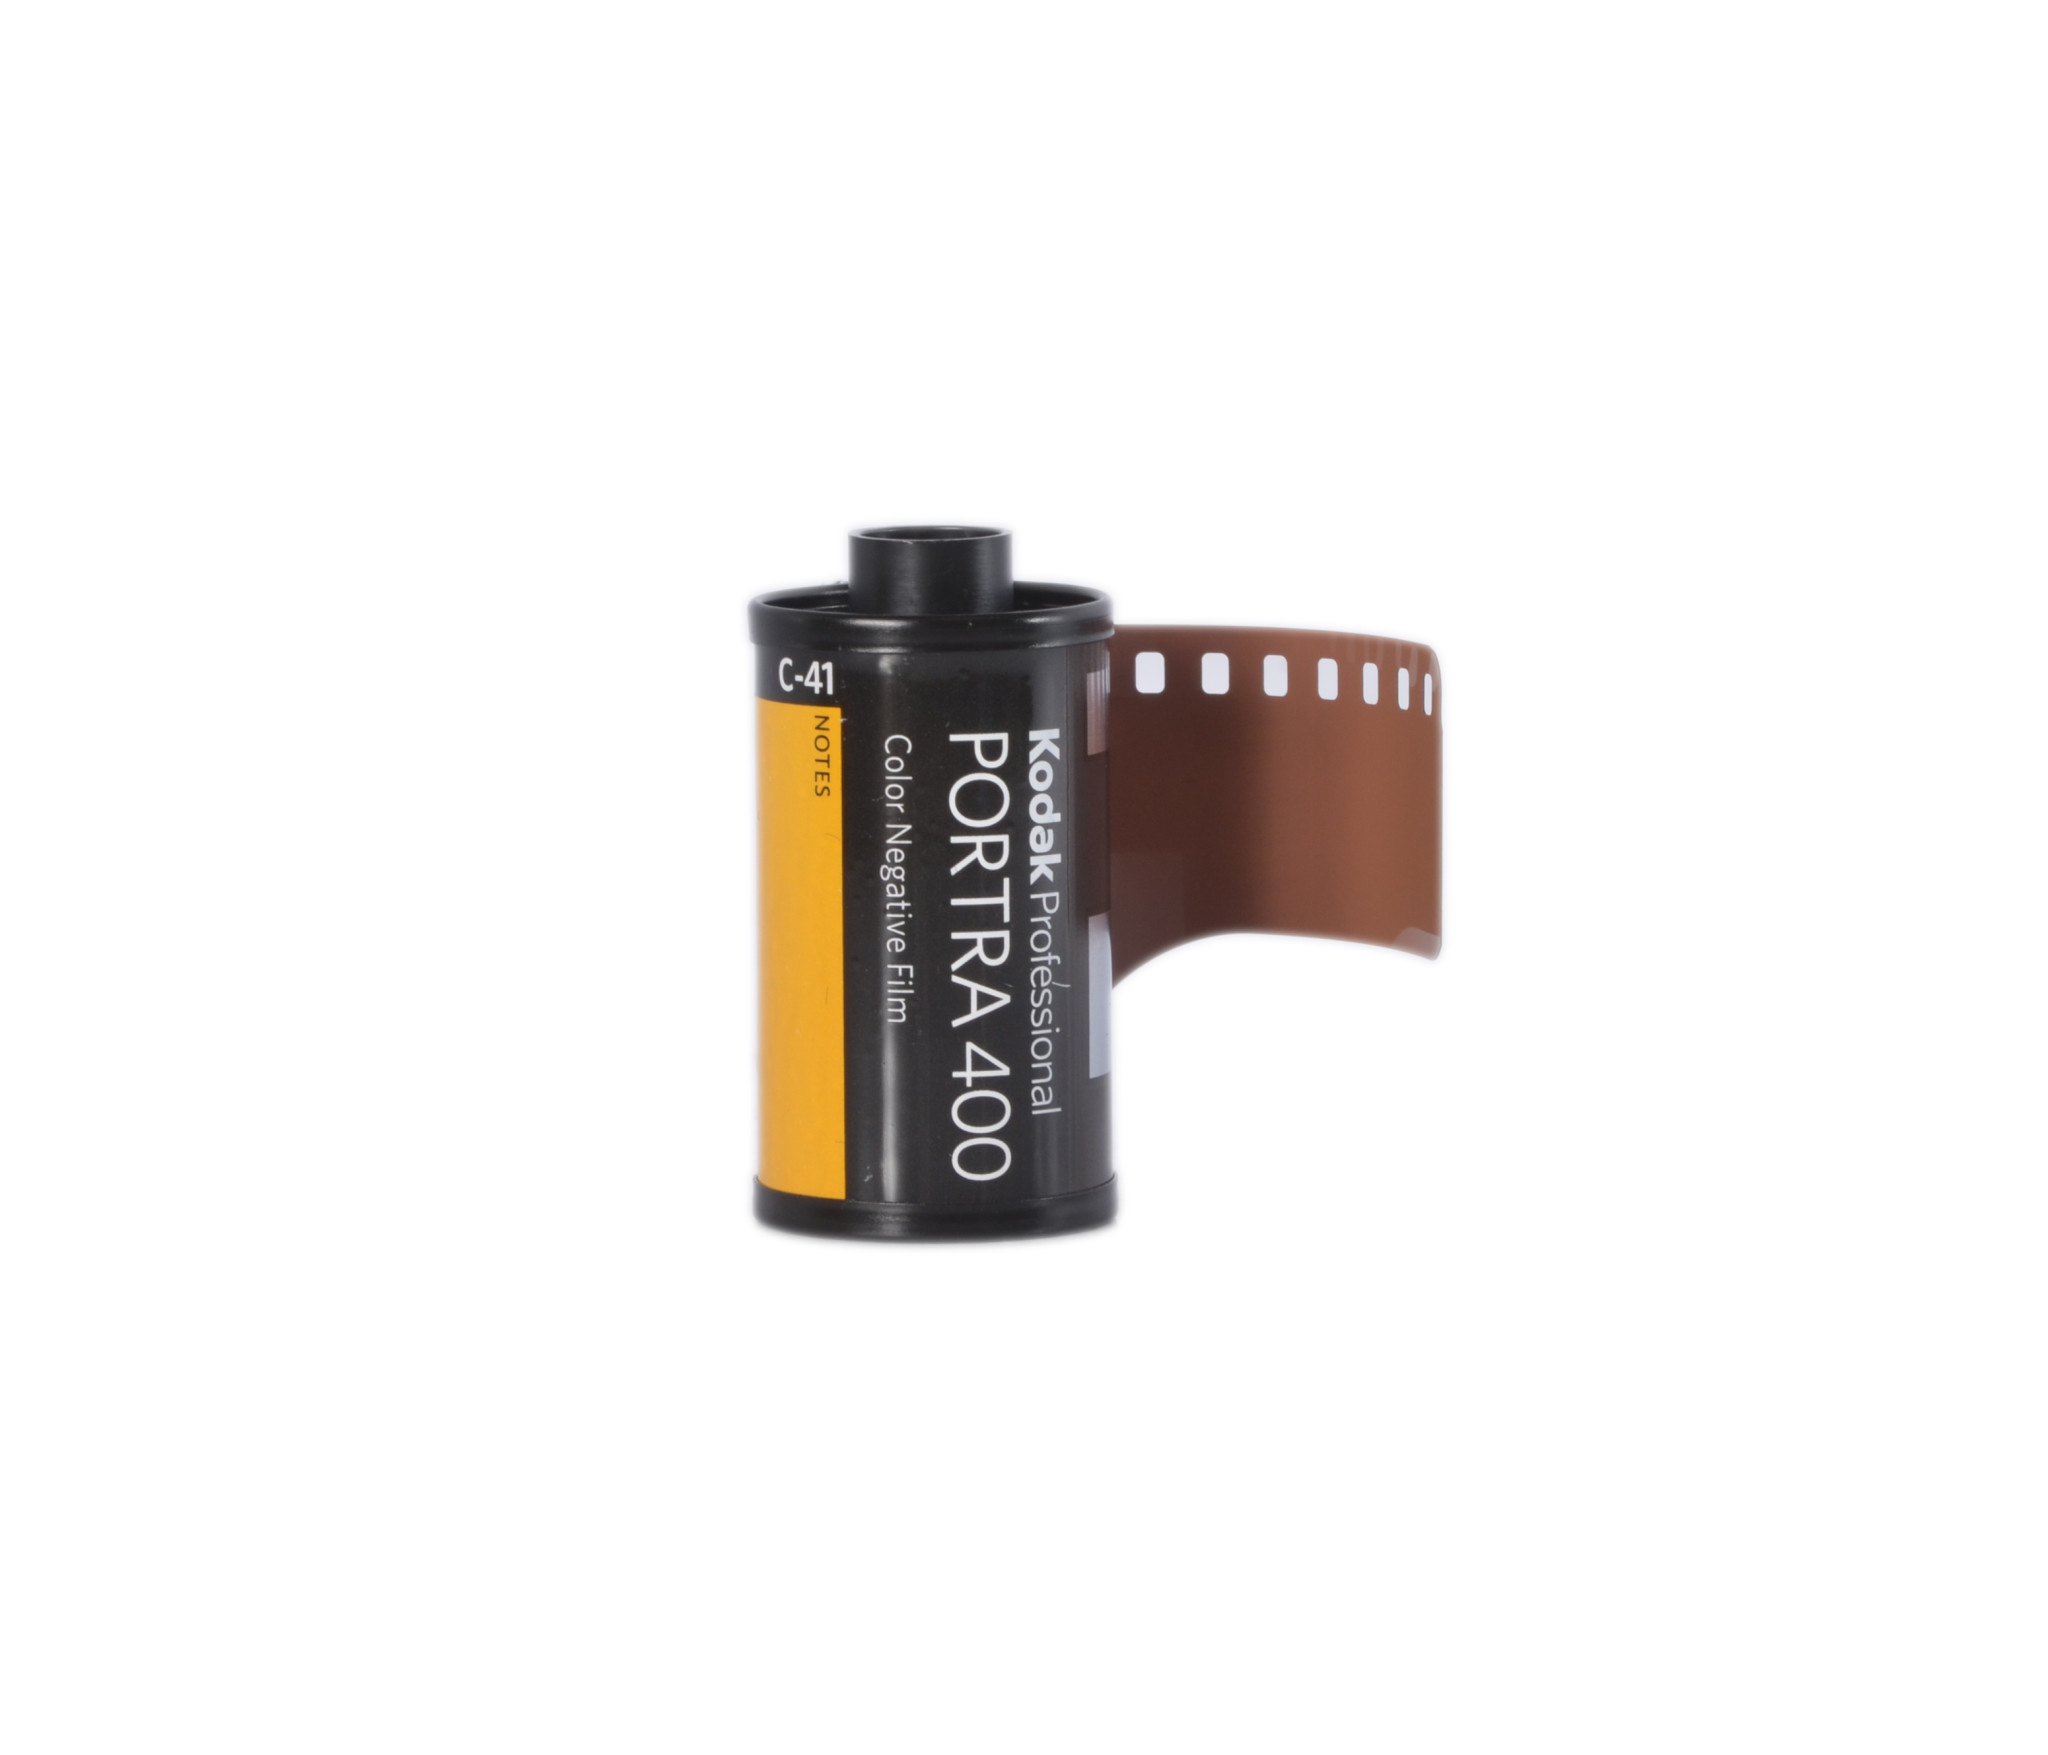 Kodak Portra 400 35mm Film — Photographique